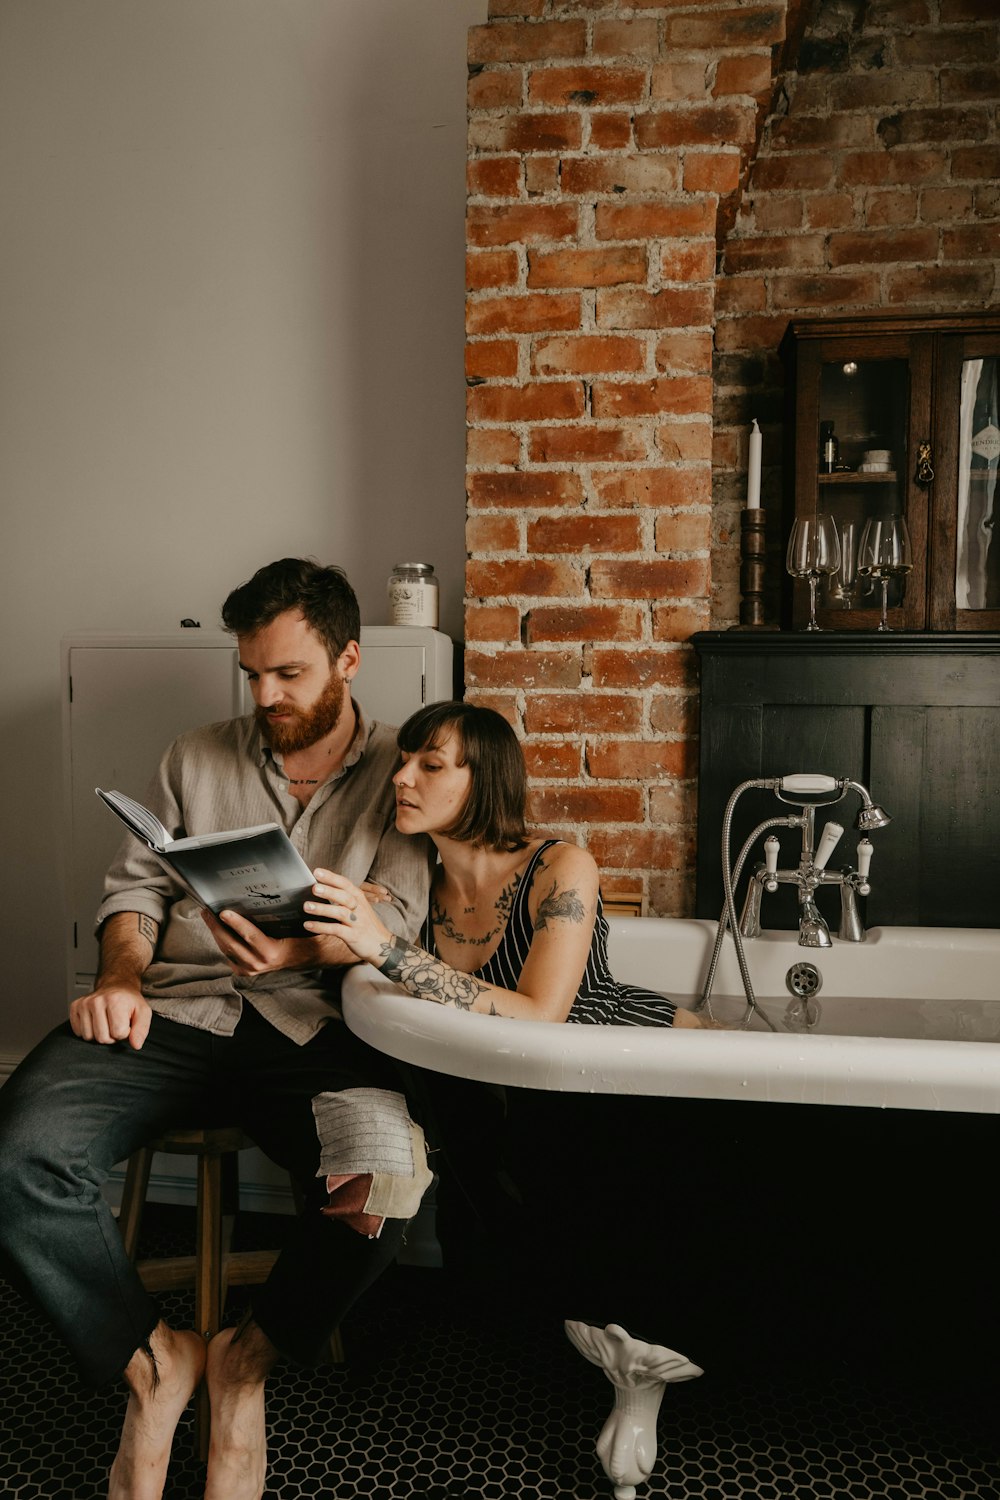 man and woman sitting on bathtub reading book